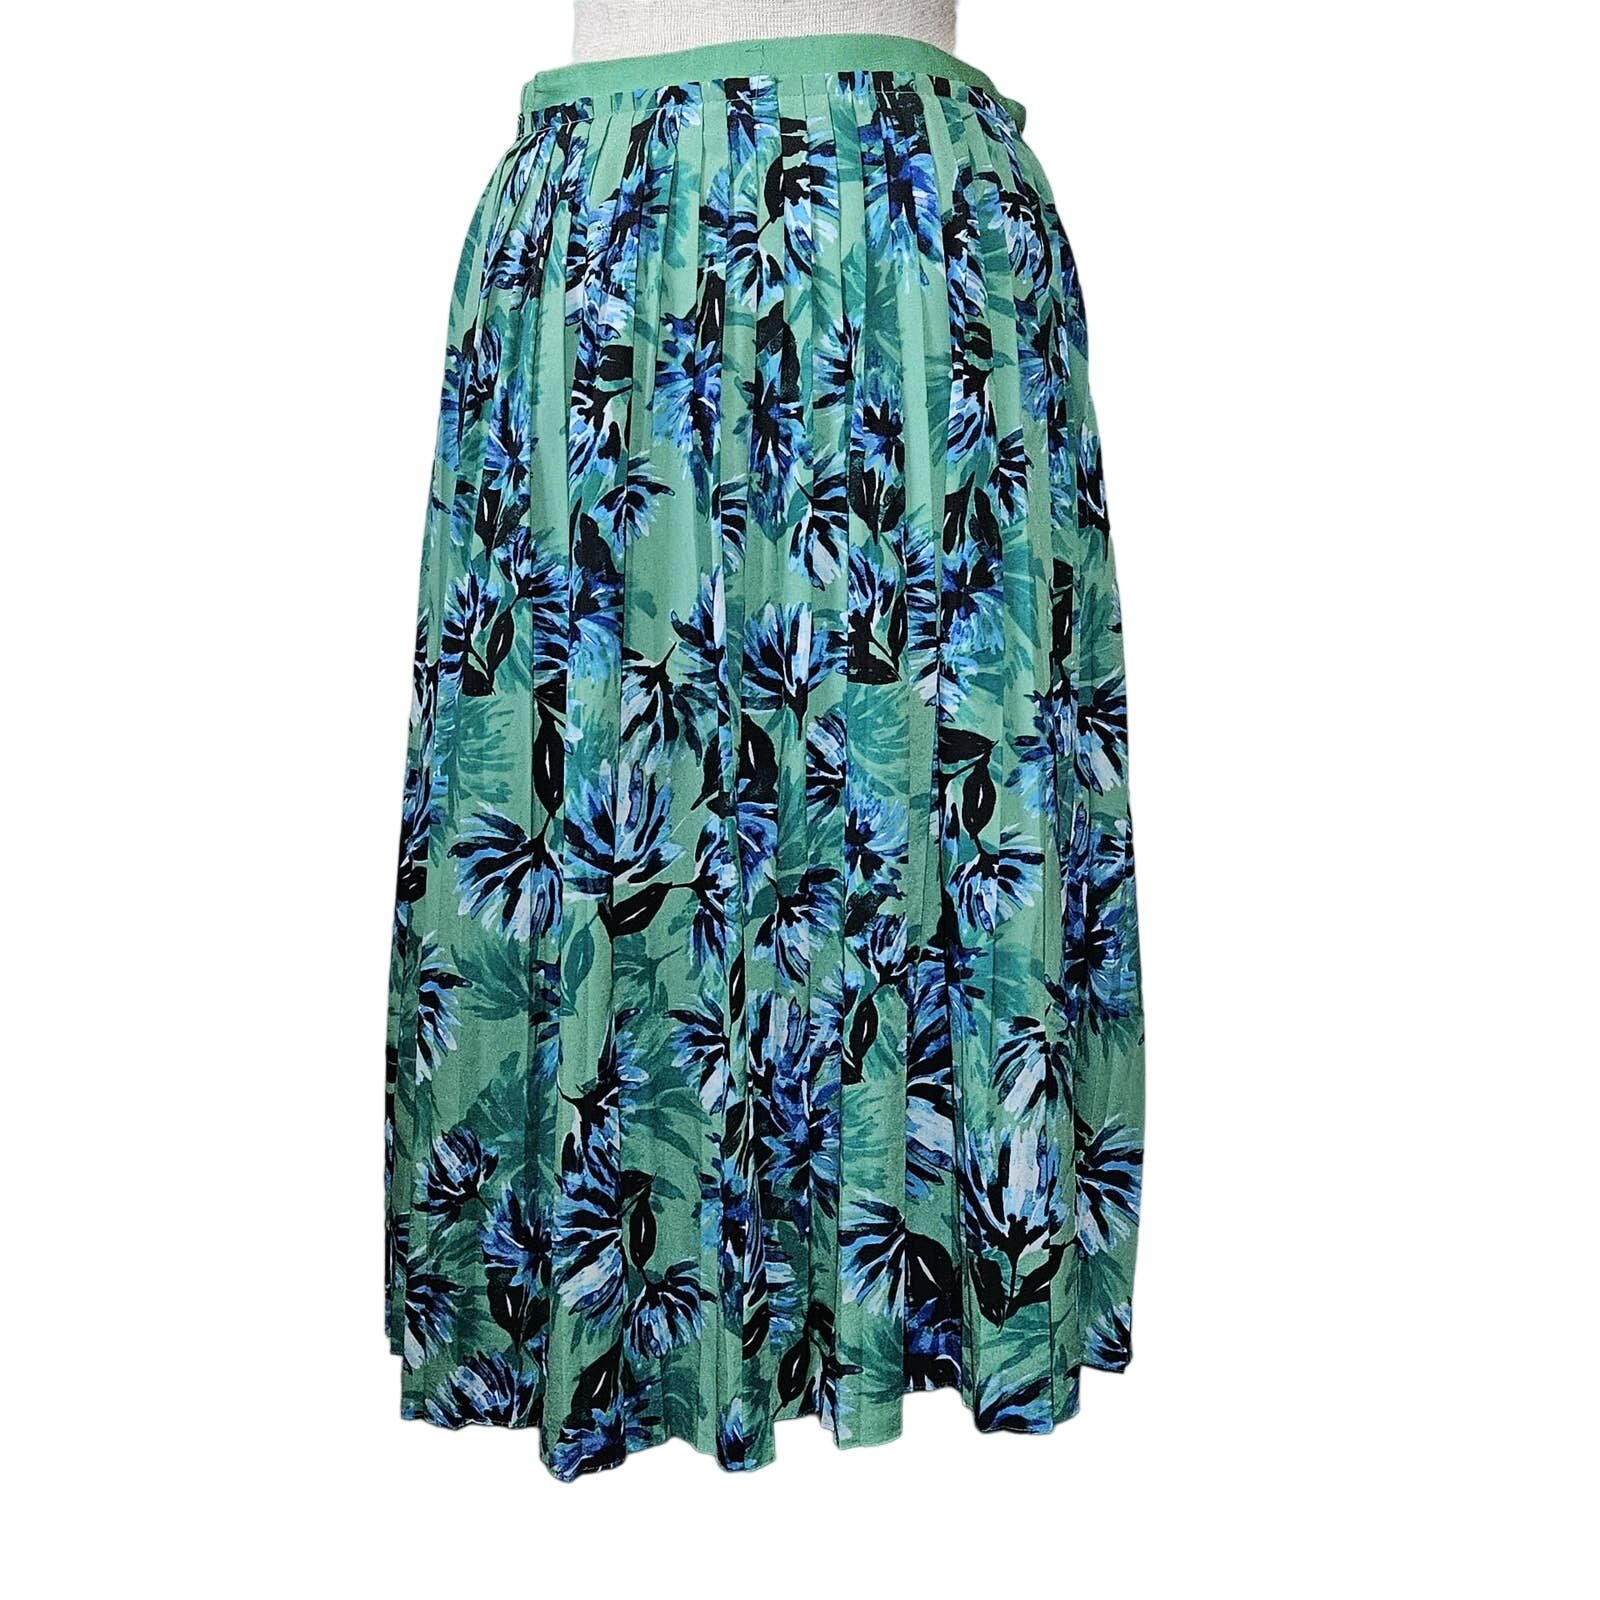 Amazing Banana Republic Floral Midi Skirt Size 2 JN5Ei3